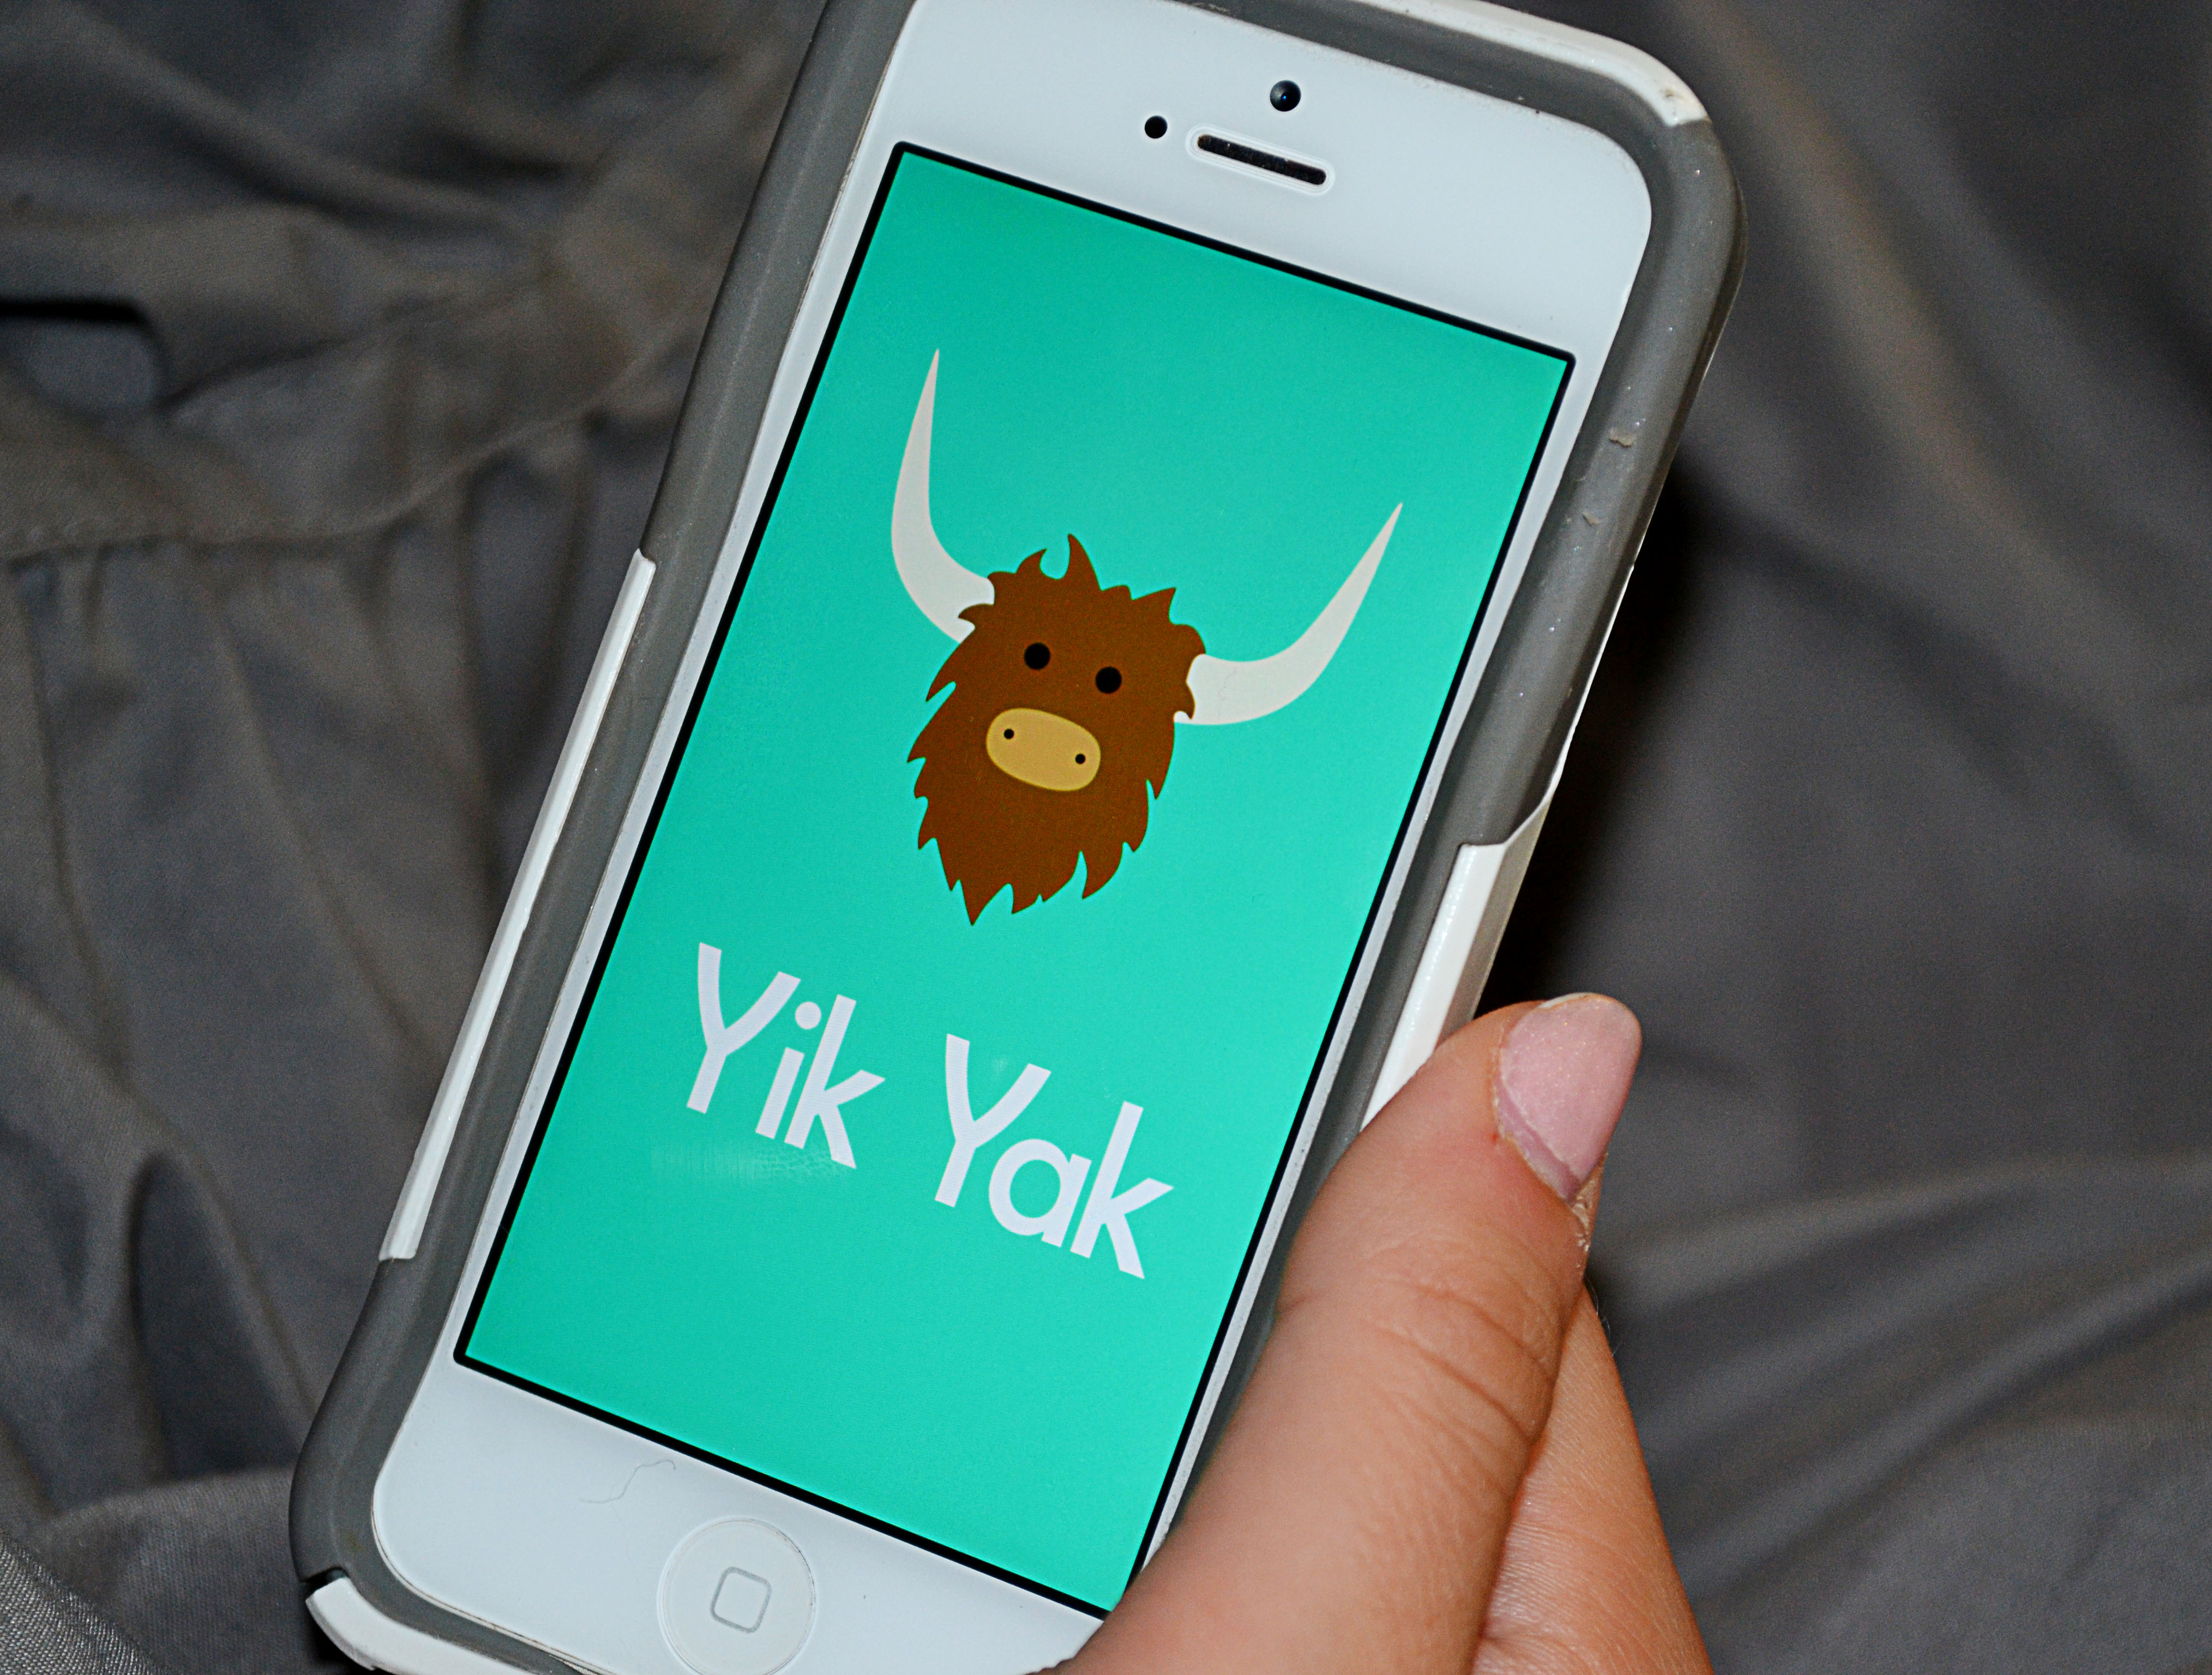 Yik Yak: A Story of Discovery